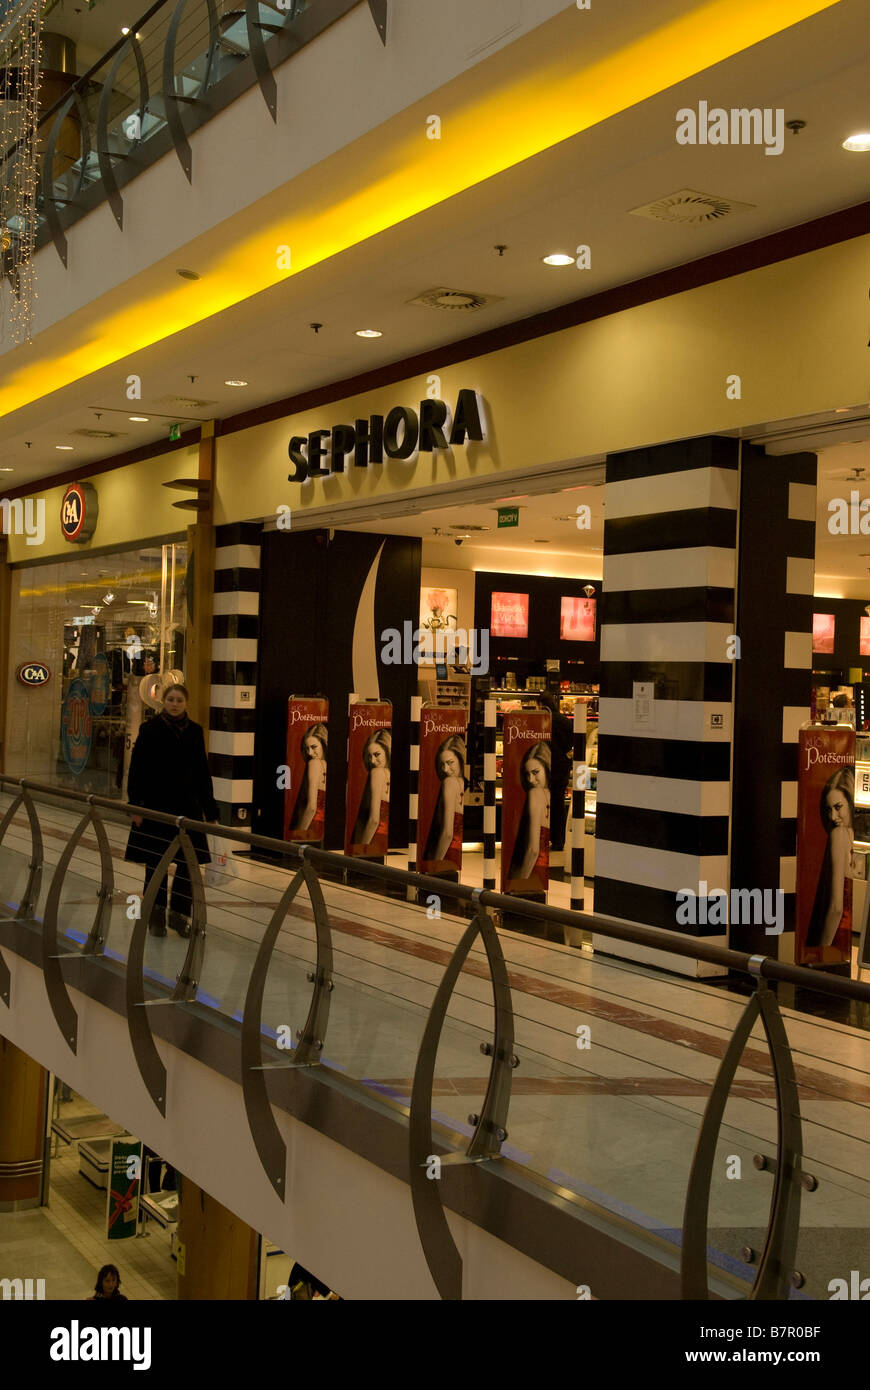 Fragrance specialist Sephora in Novy Smichov shopping centre, Prague, Czech republic. Stock Photo